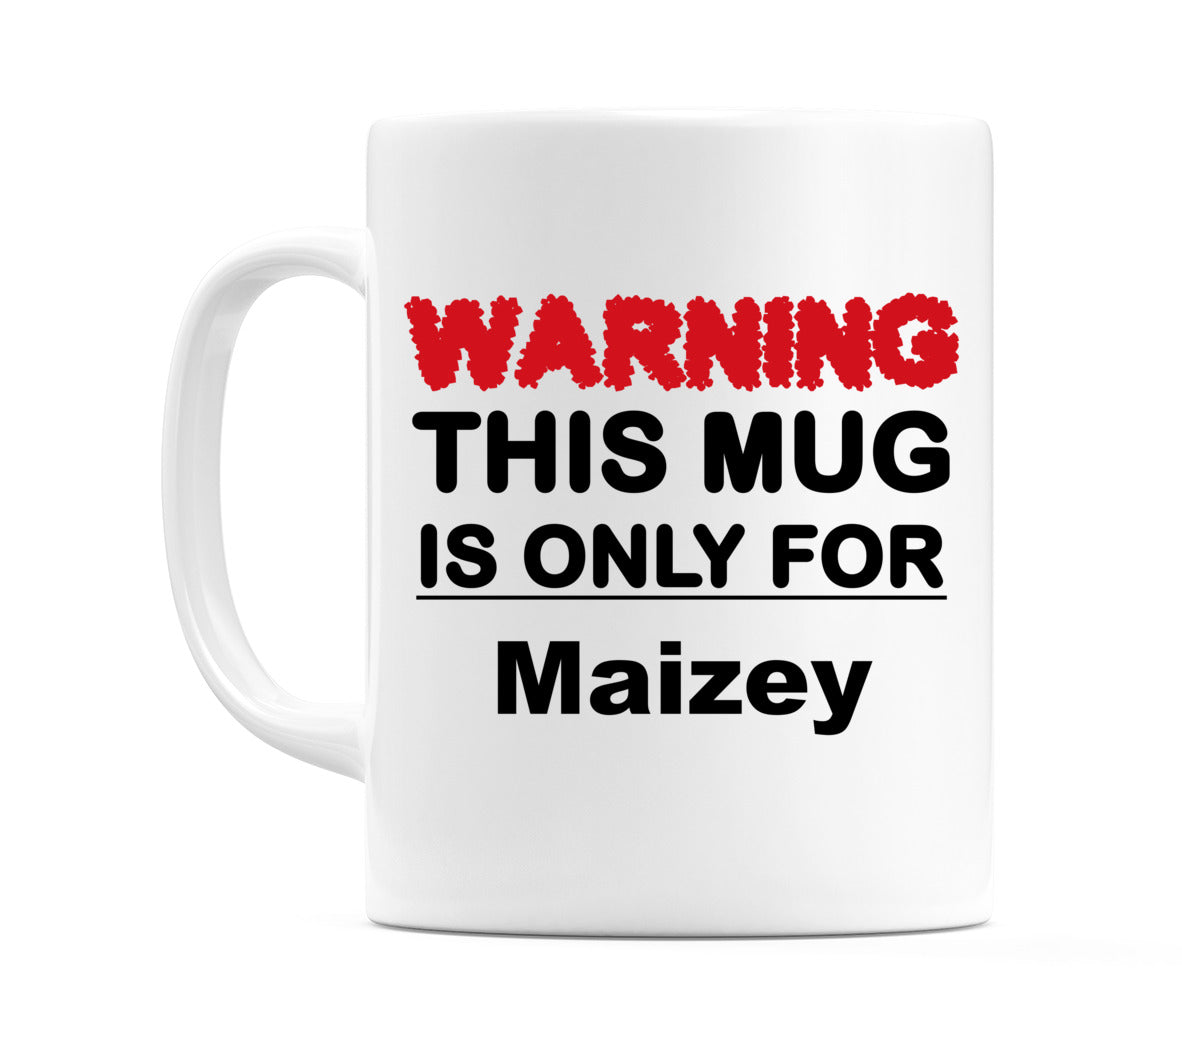 Warning This Mug is ONLY for Maizey Mug